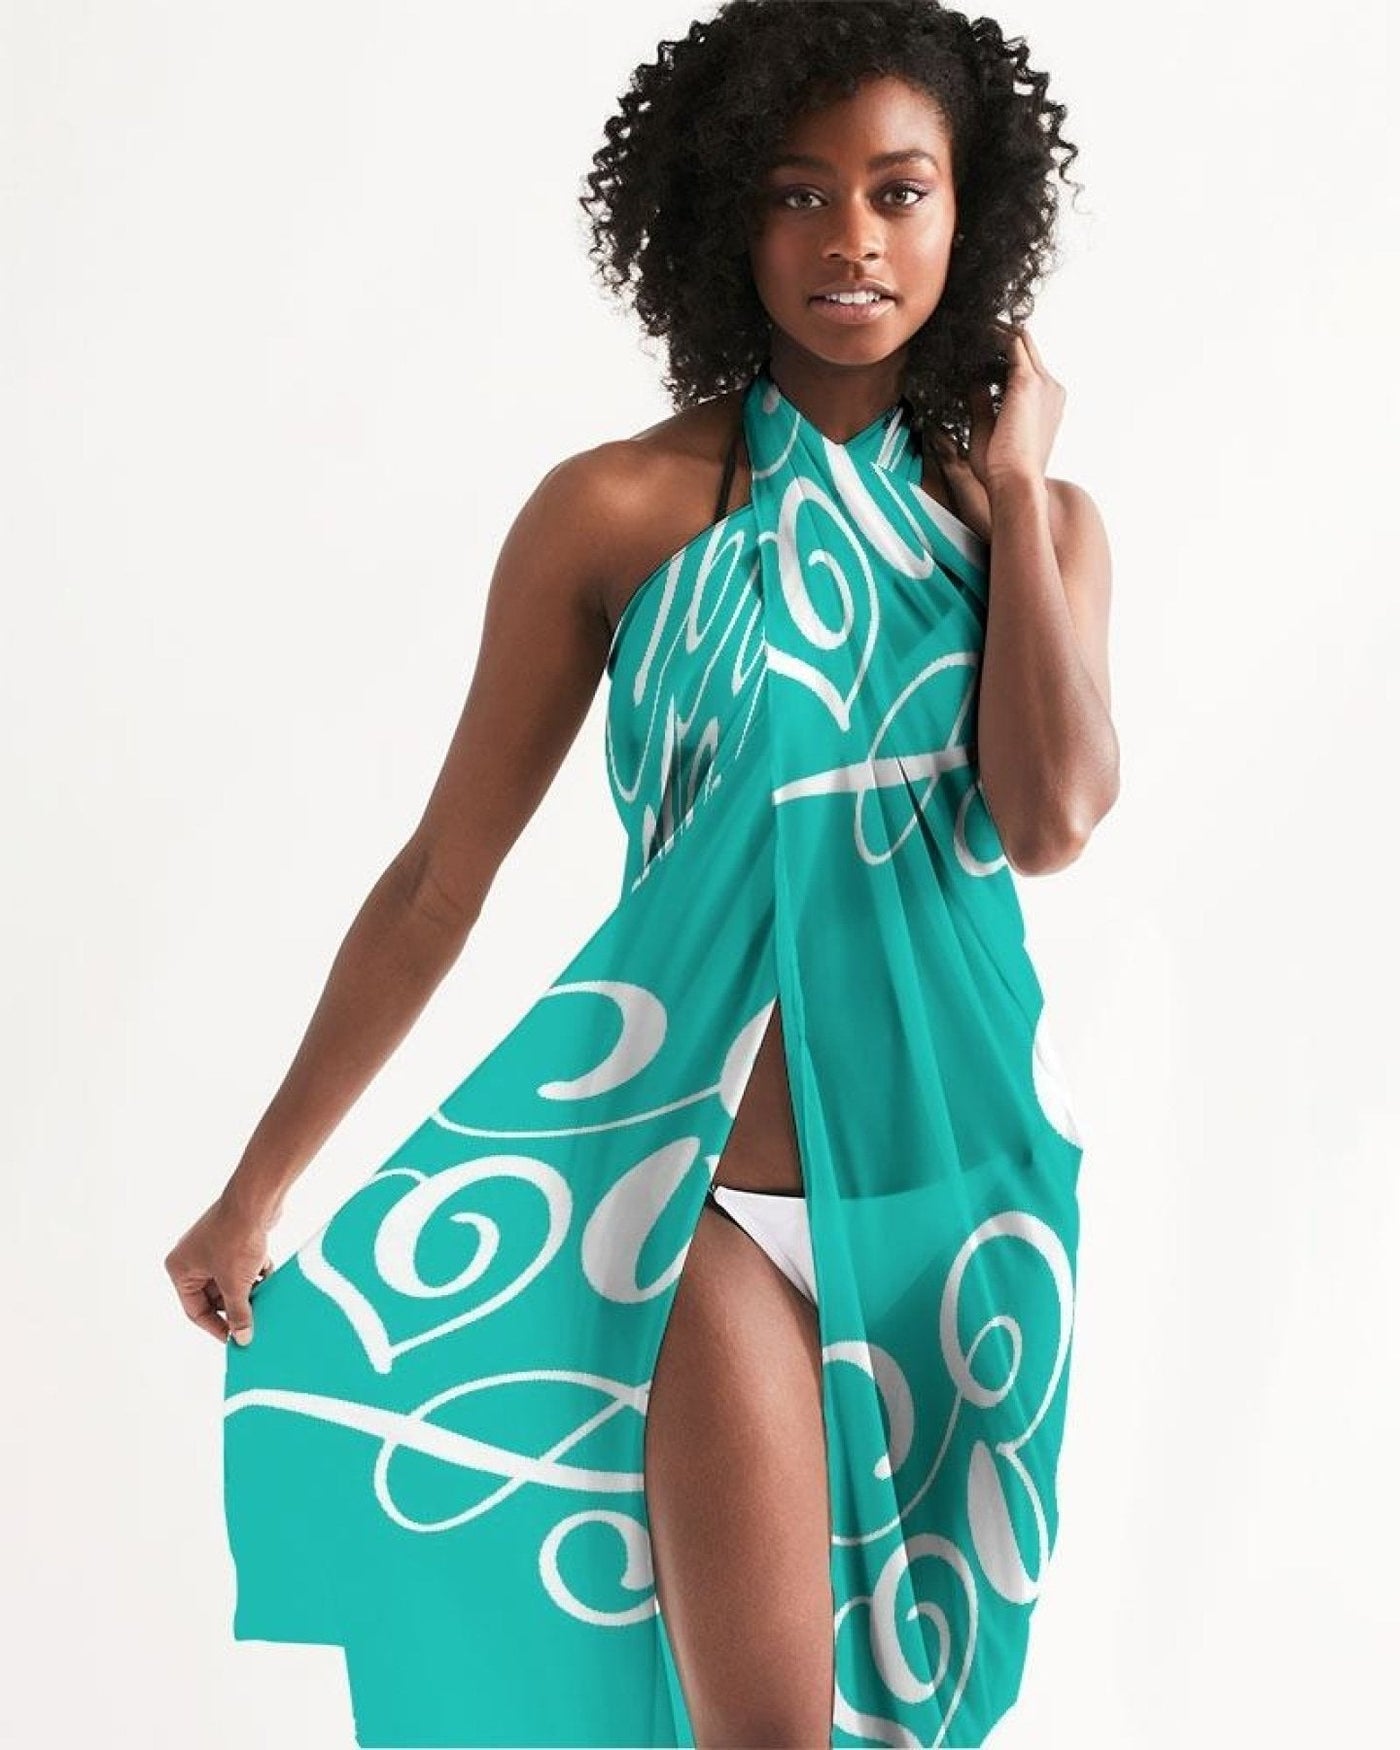 Sheer Love Green Swimsuit Cover Up - Womens | Swimwear | Sarong Wrap